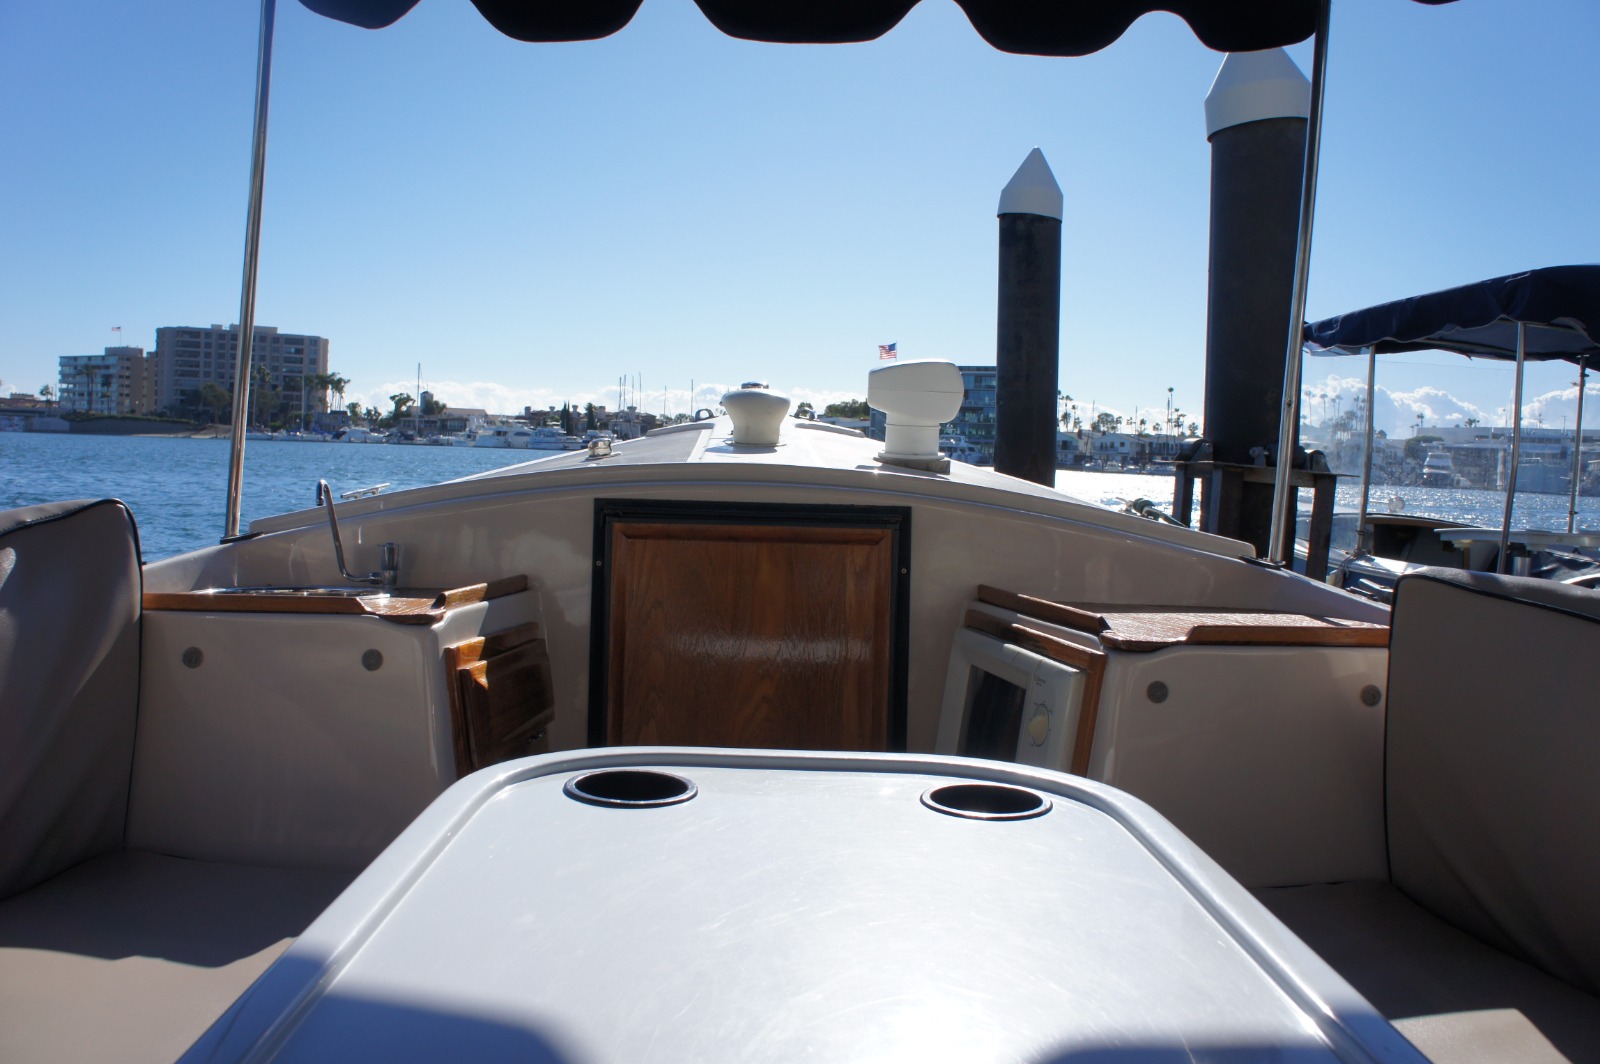 Duffy Electric Boat Rentals Newport Beach